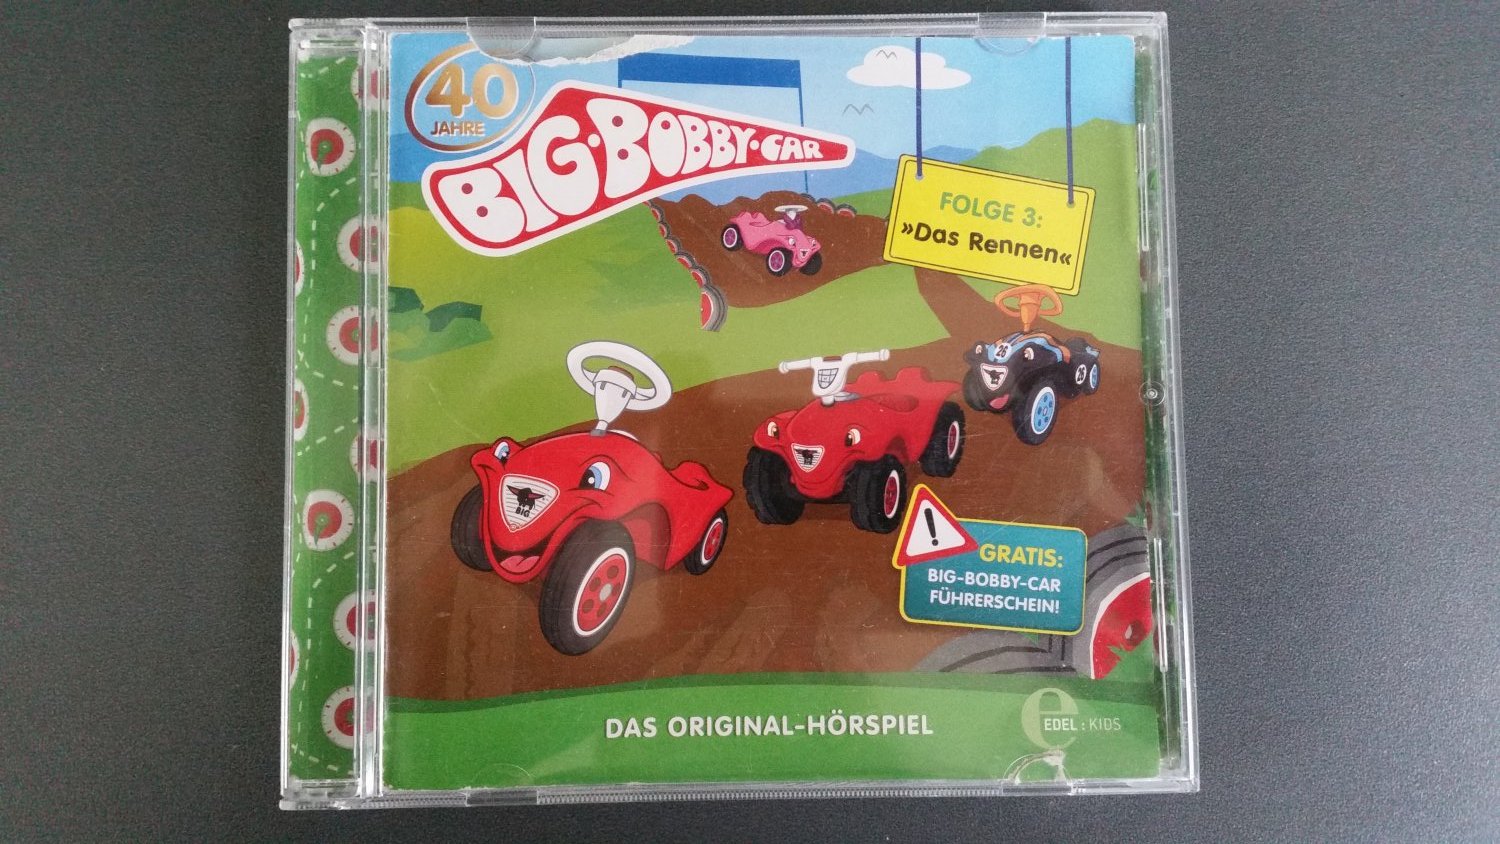 Big Bobby Car - Das Original-Hörspiel, Folge 3 - Audiobook by BIG